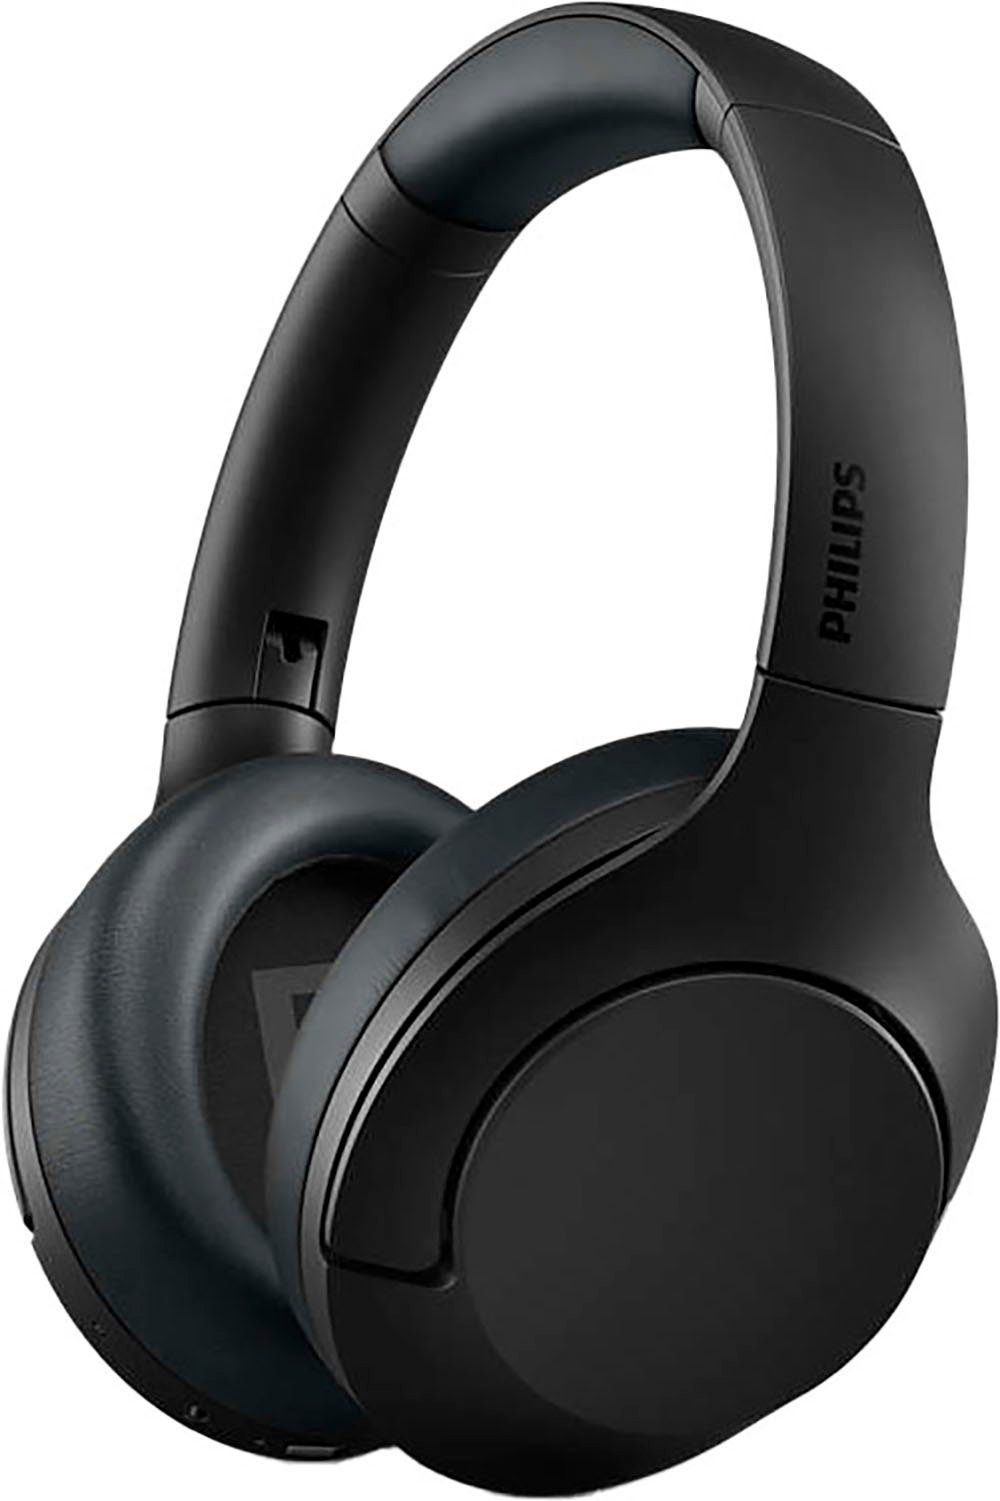 Over-Ear-Kopfhörer Cancelling Noise TAH8506 (Active Philips Bluetooth) (ANC), schwarz